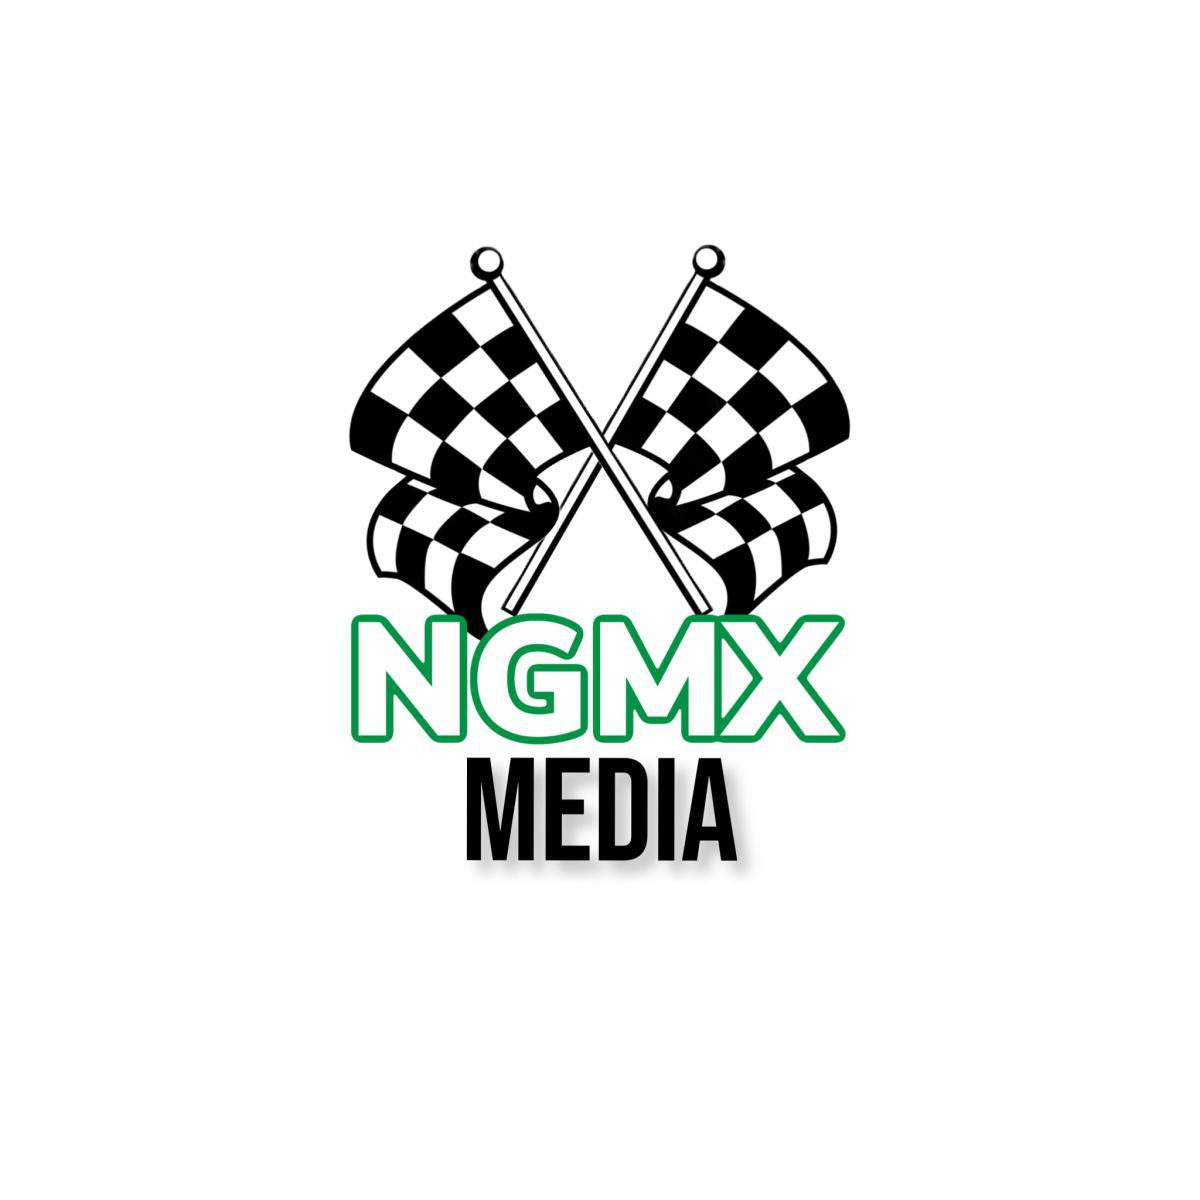 PR: NGMX - Media